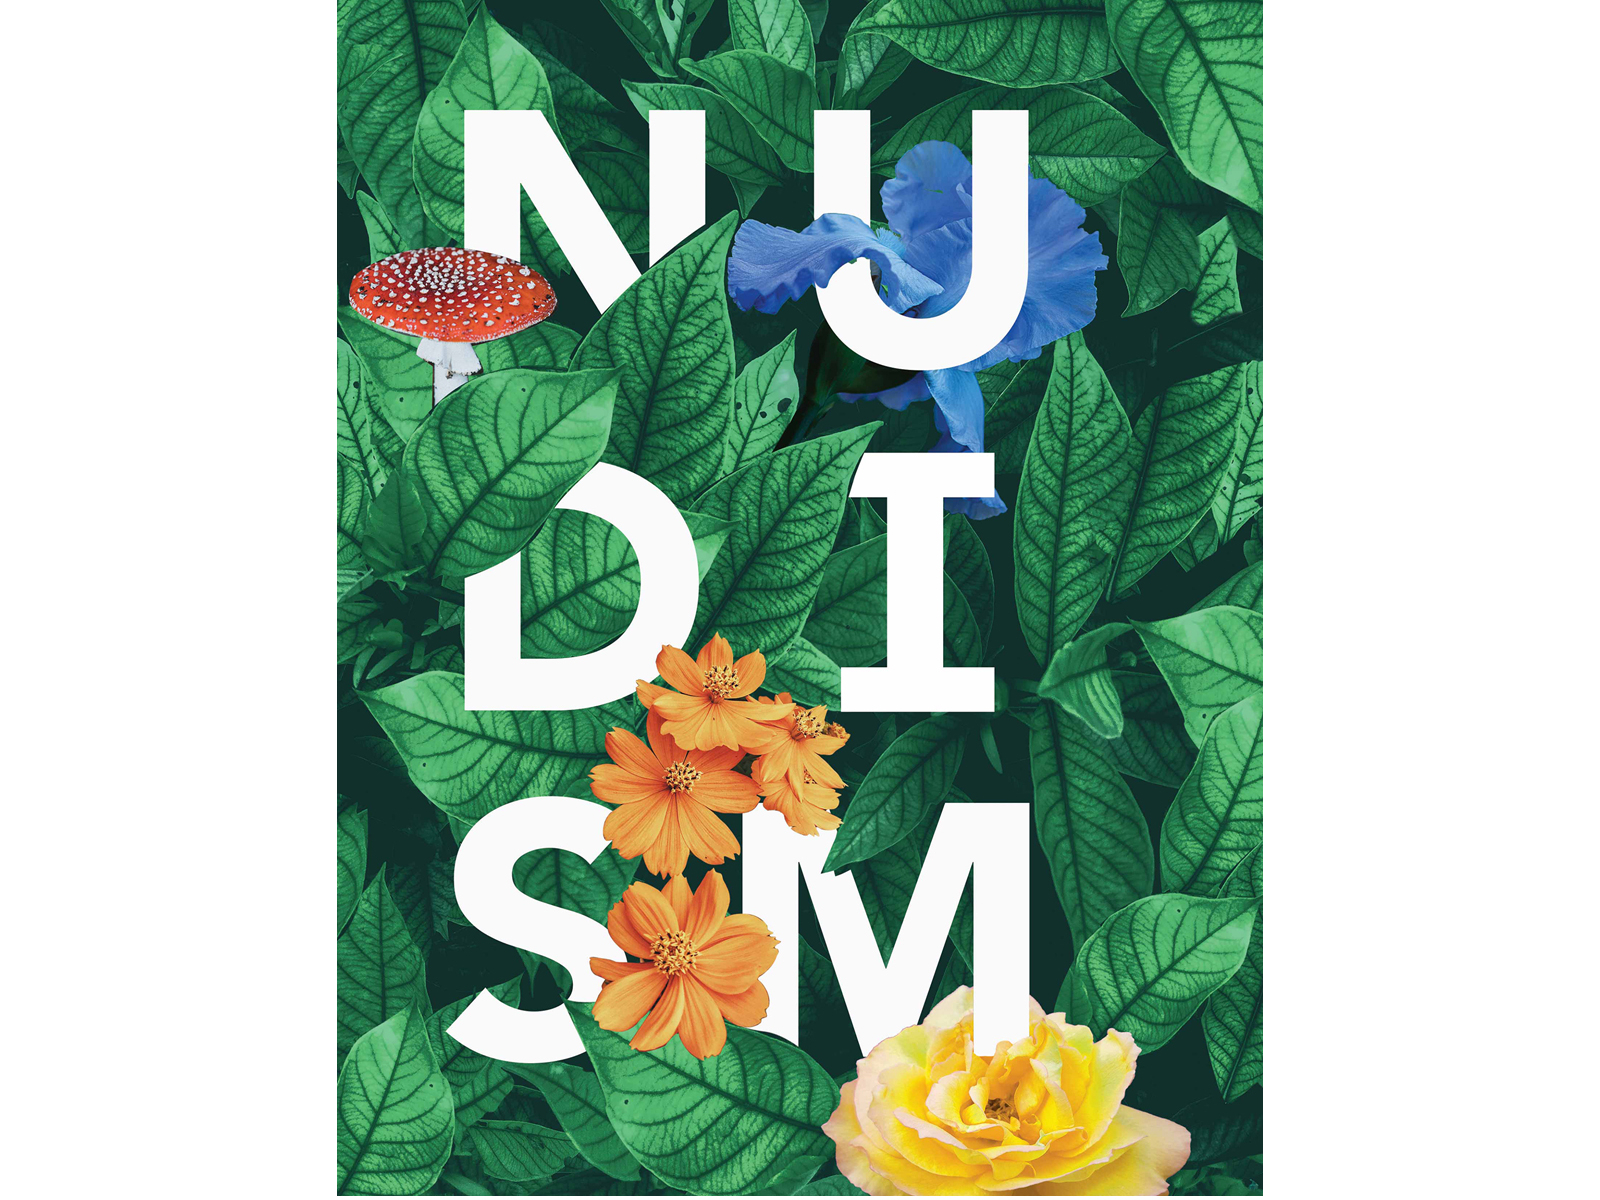 Nudism design eden floral garden lush magazine design nature photoshop typography